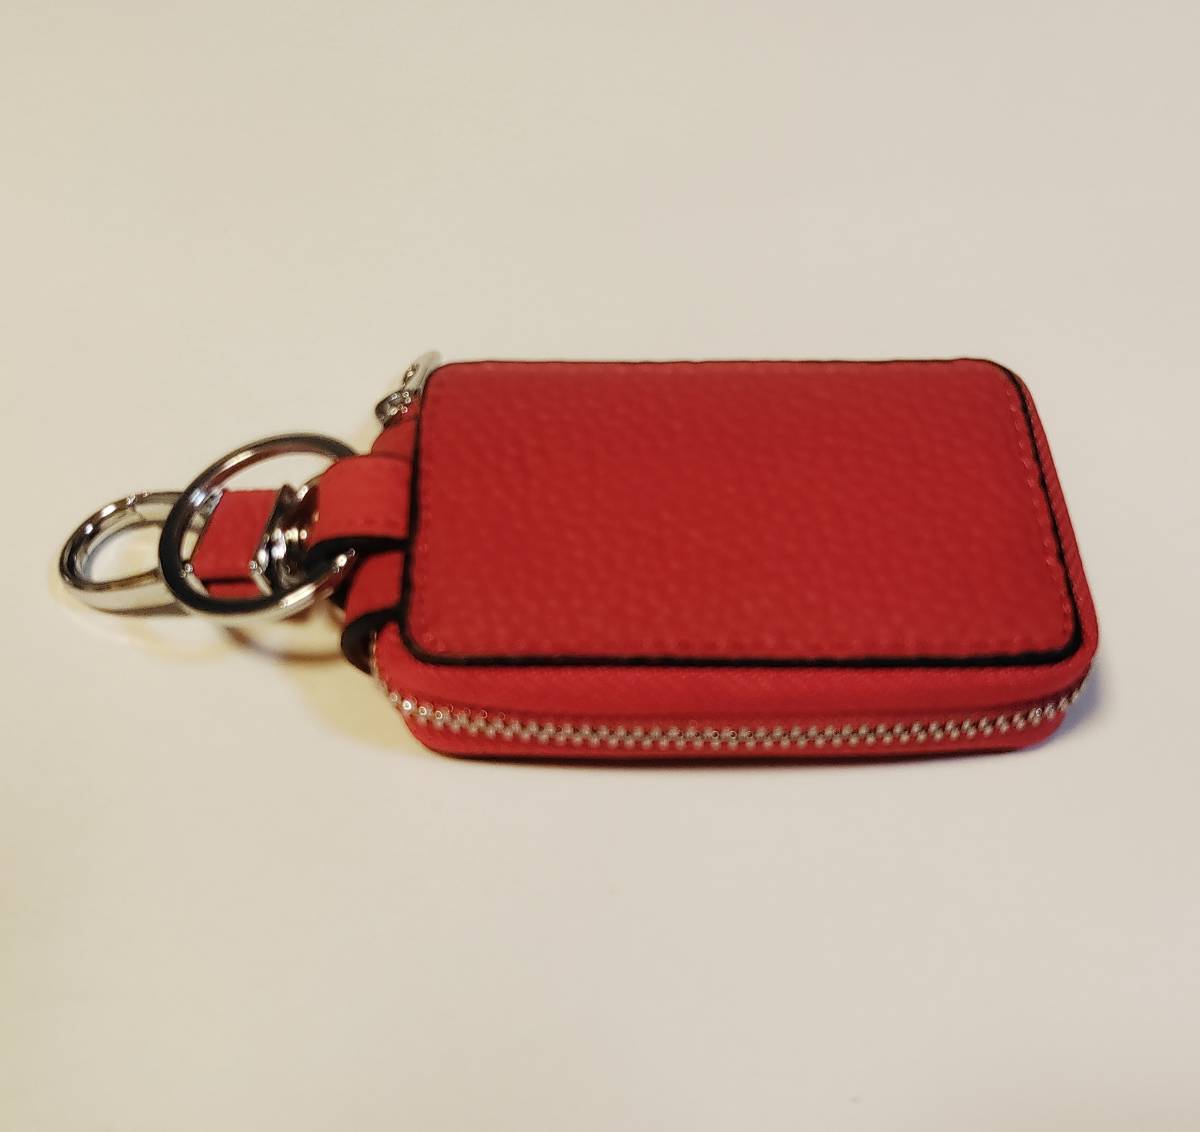  key case * new goods * unused goods original leather smart key key holder key key chain red 